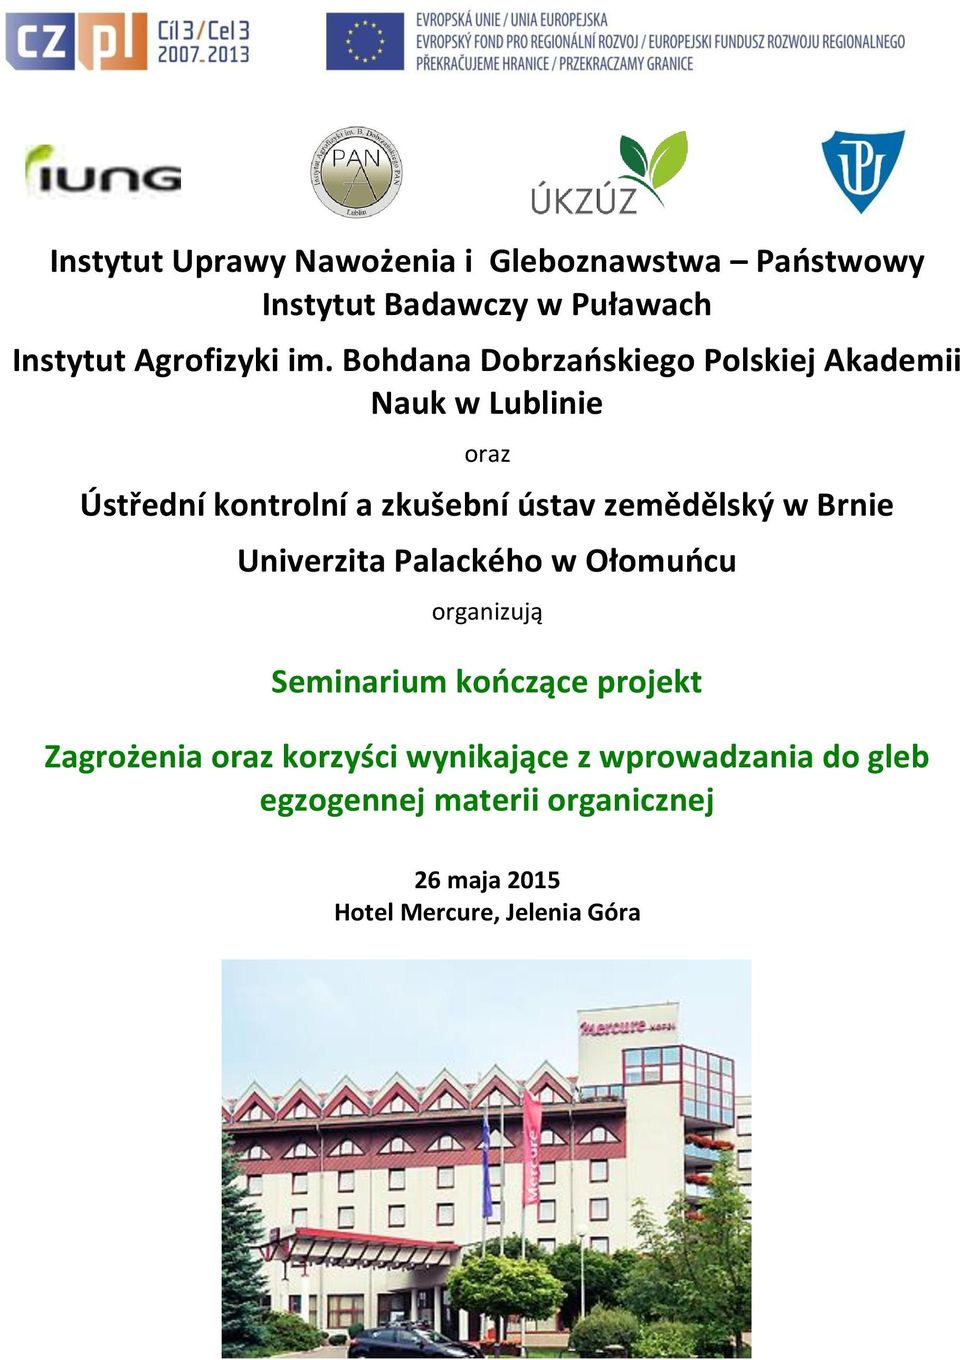 zemědělský w Brnie Univerzita Palackého w Ołomuńcu organizują Seminarium kończące projekt Zagrożenia